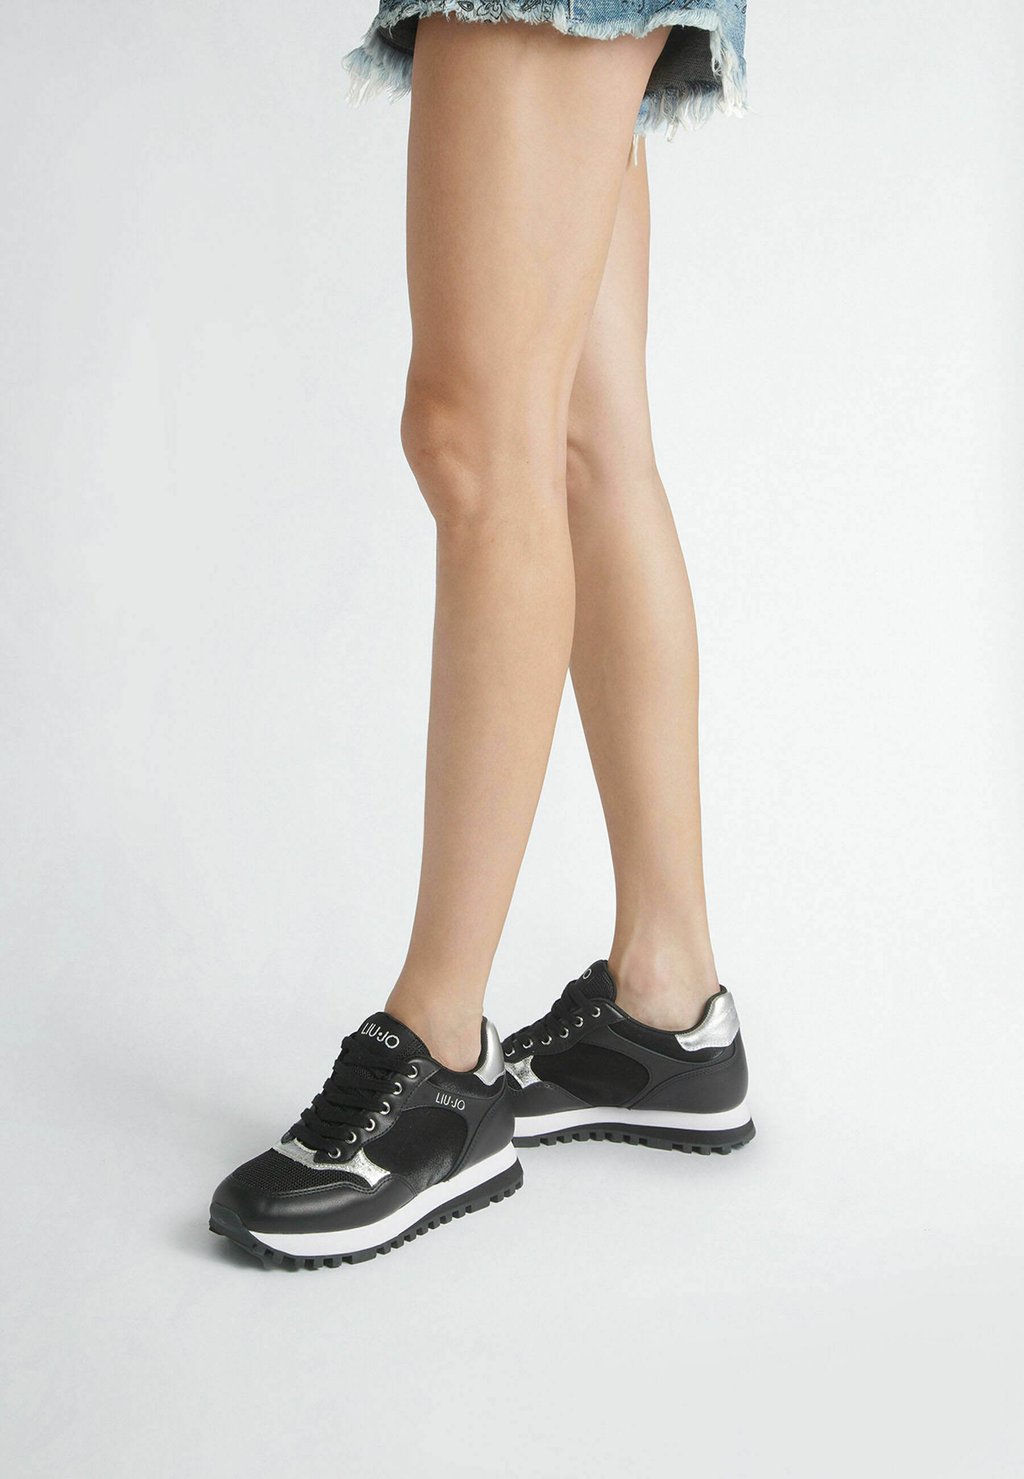 Низкие кроссовки Brighty LIU JO, черный кроссовки низкие liu jo brighty mesh platform sneakers цвет silver colour